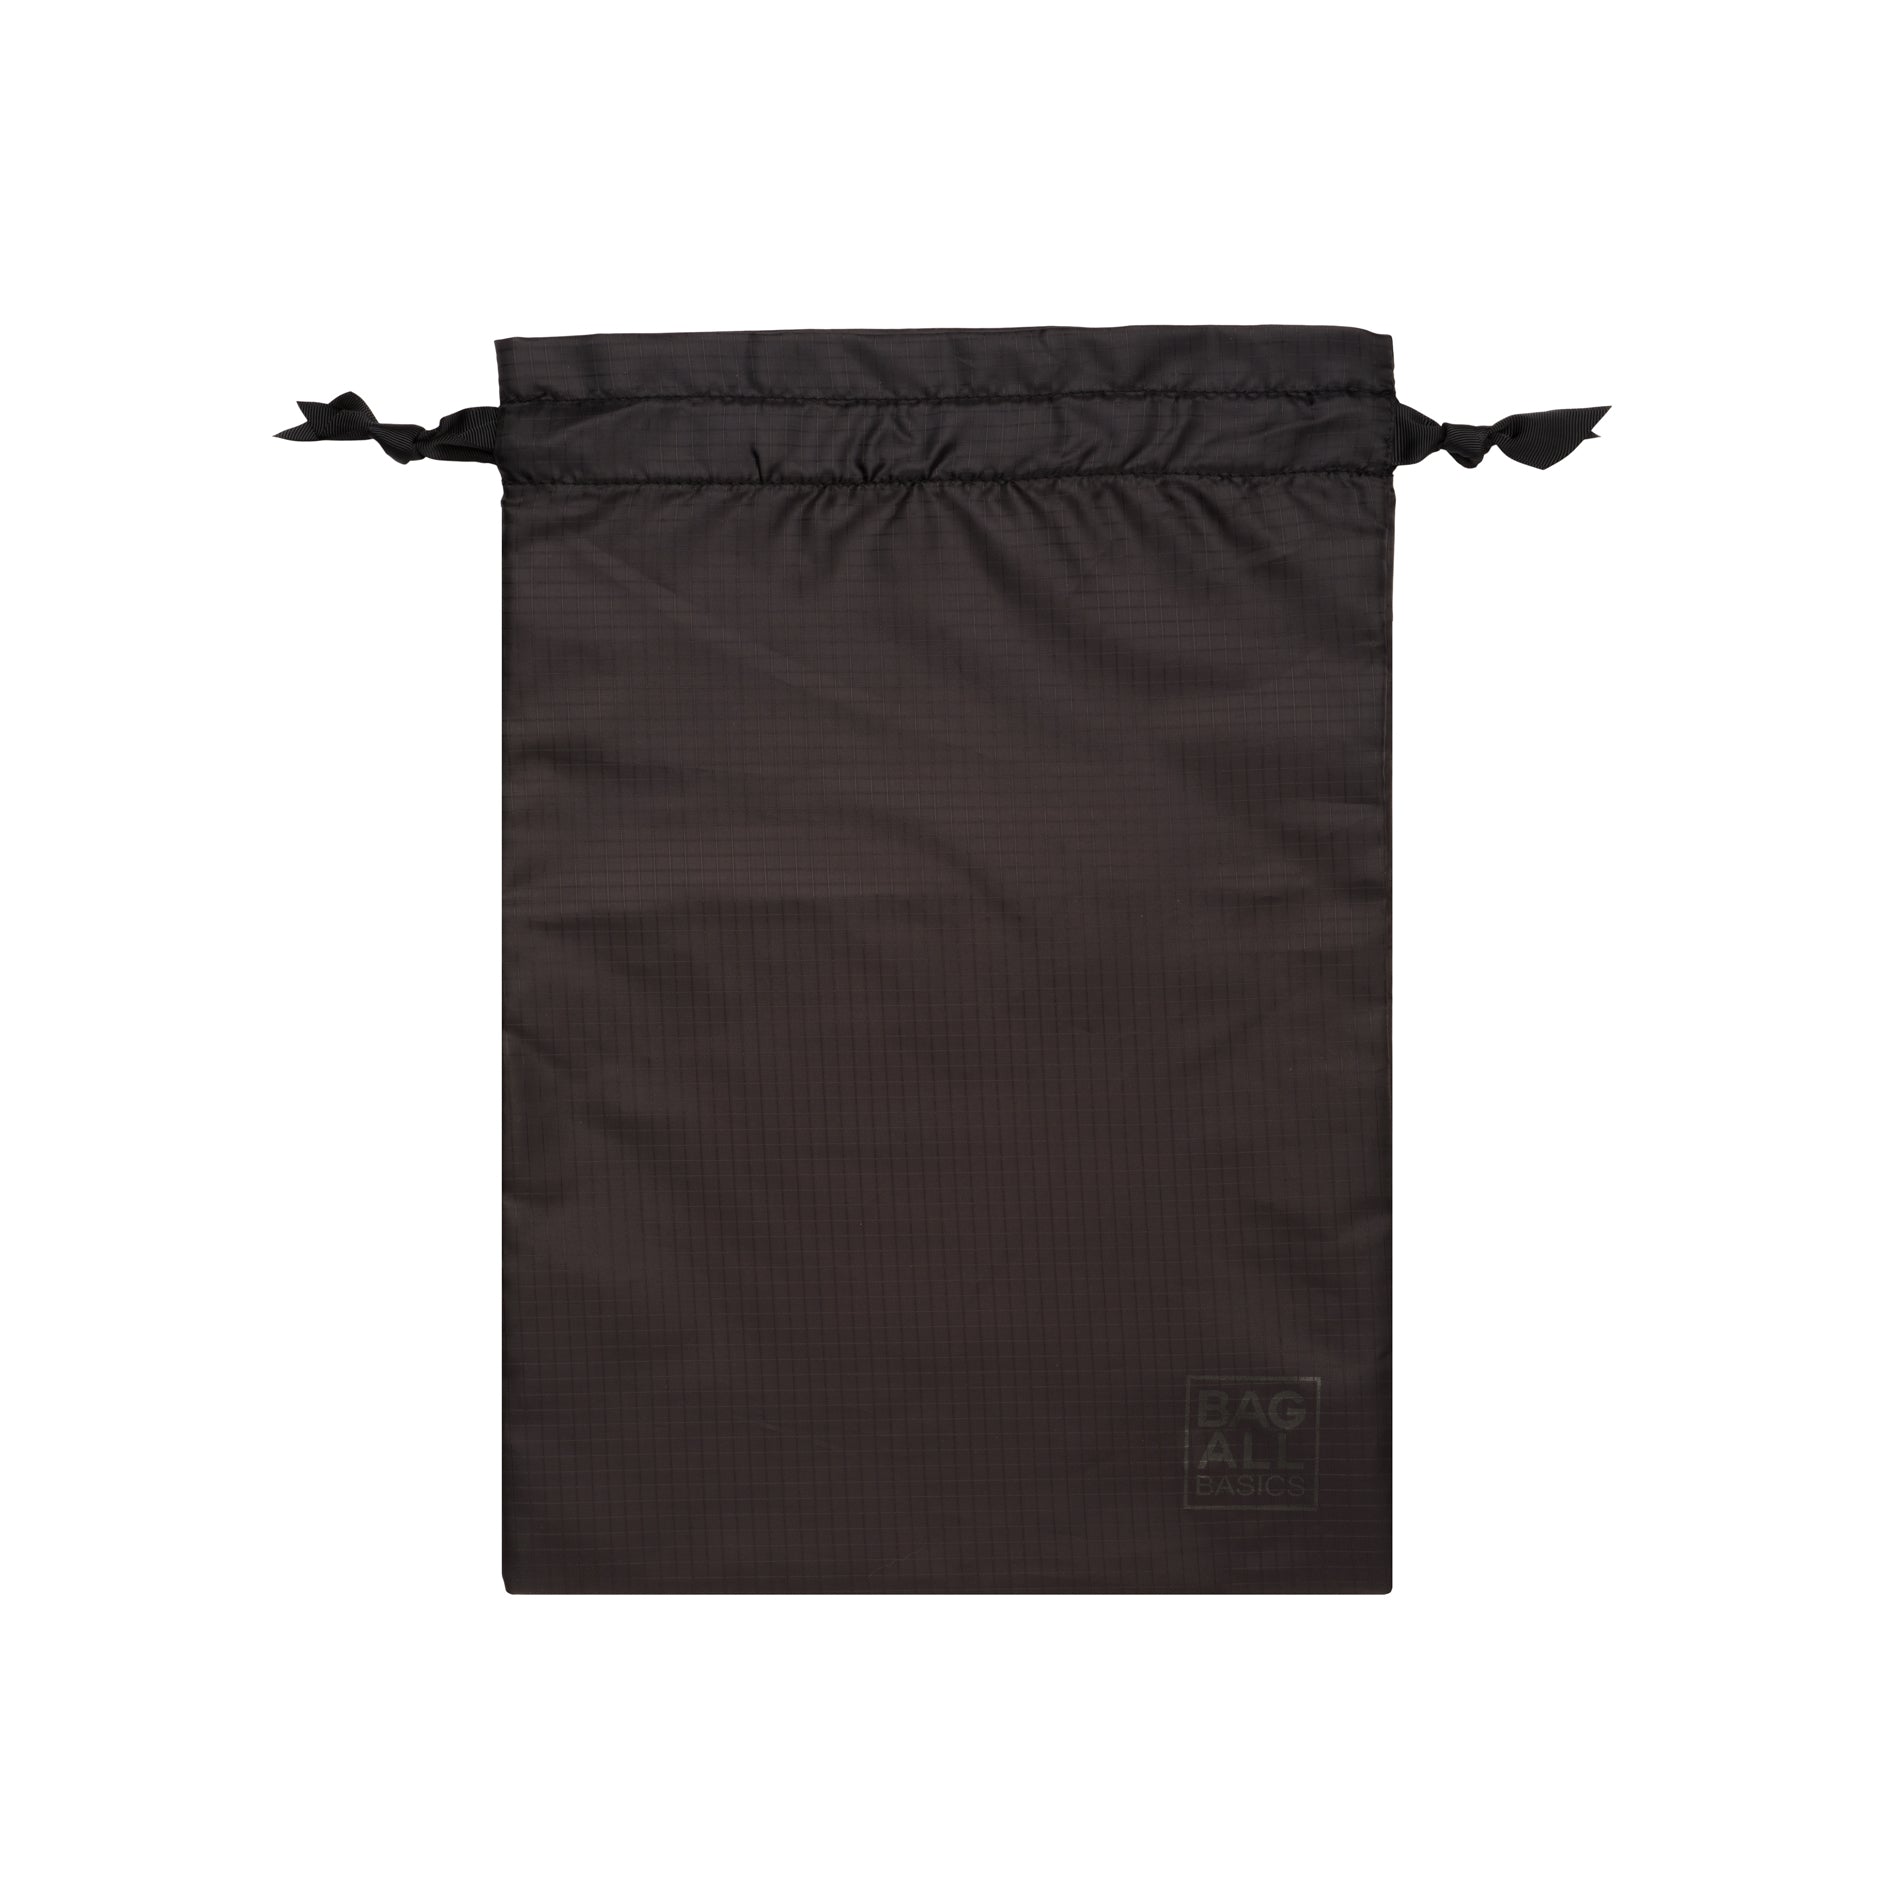 Bag-all Basic Packing Bags Set, 8-pack, Black | Bag-all